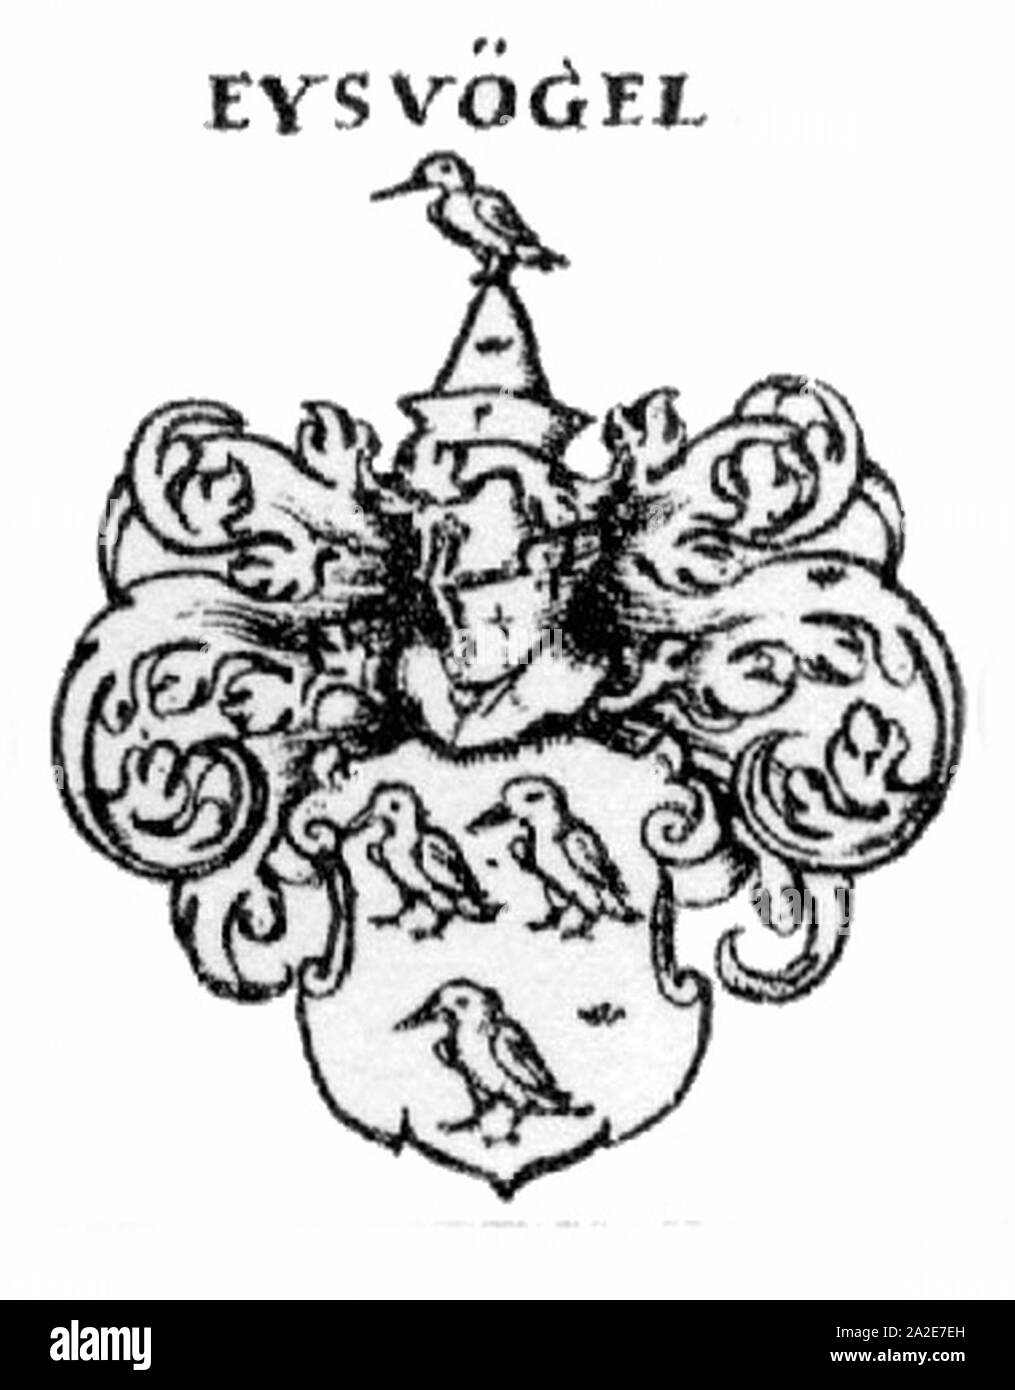 Eisvogel Siebmacher157 - 1703 - Patrizier Nürnberg. Stock Photo